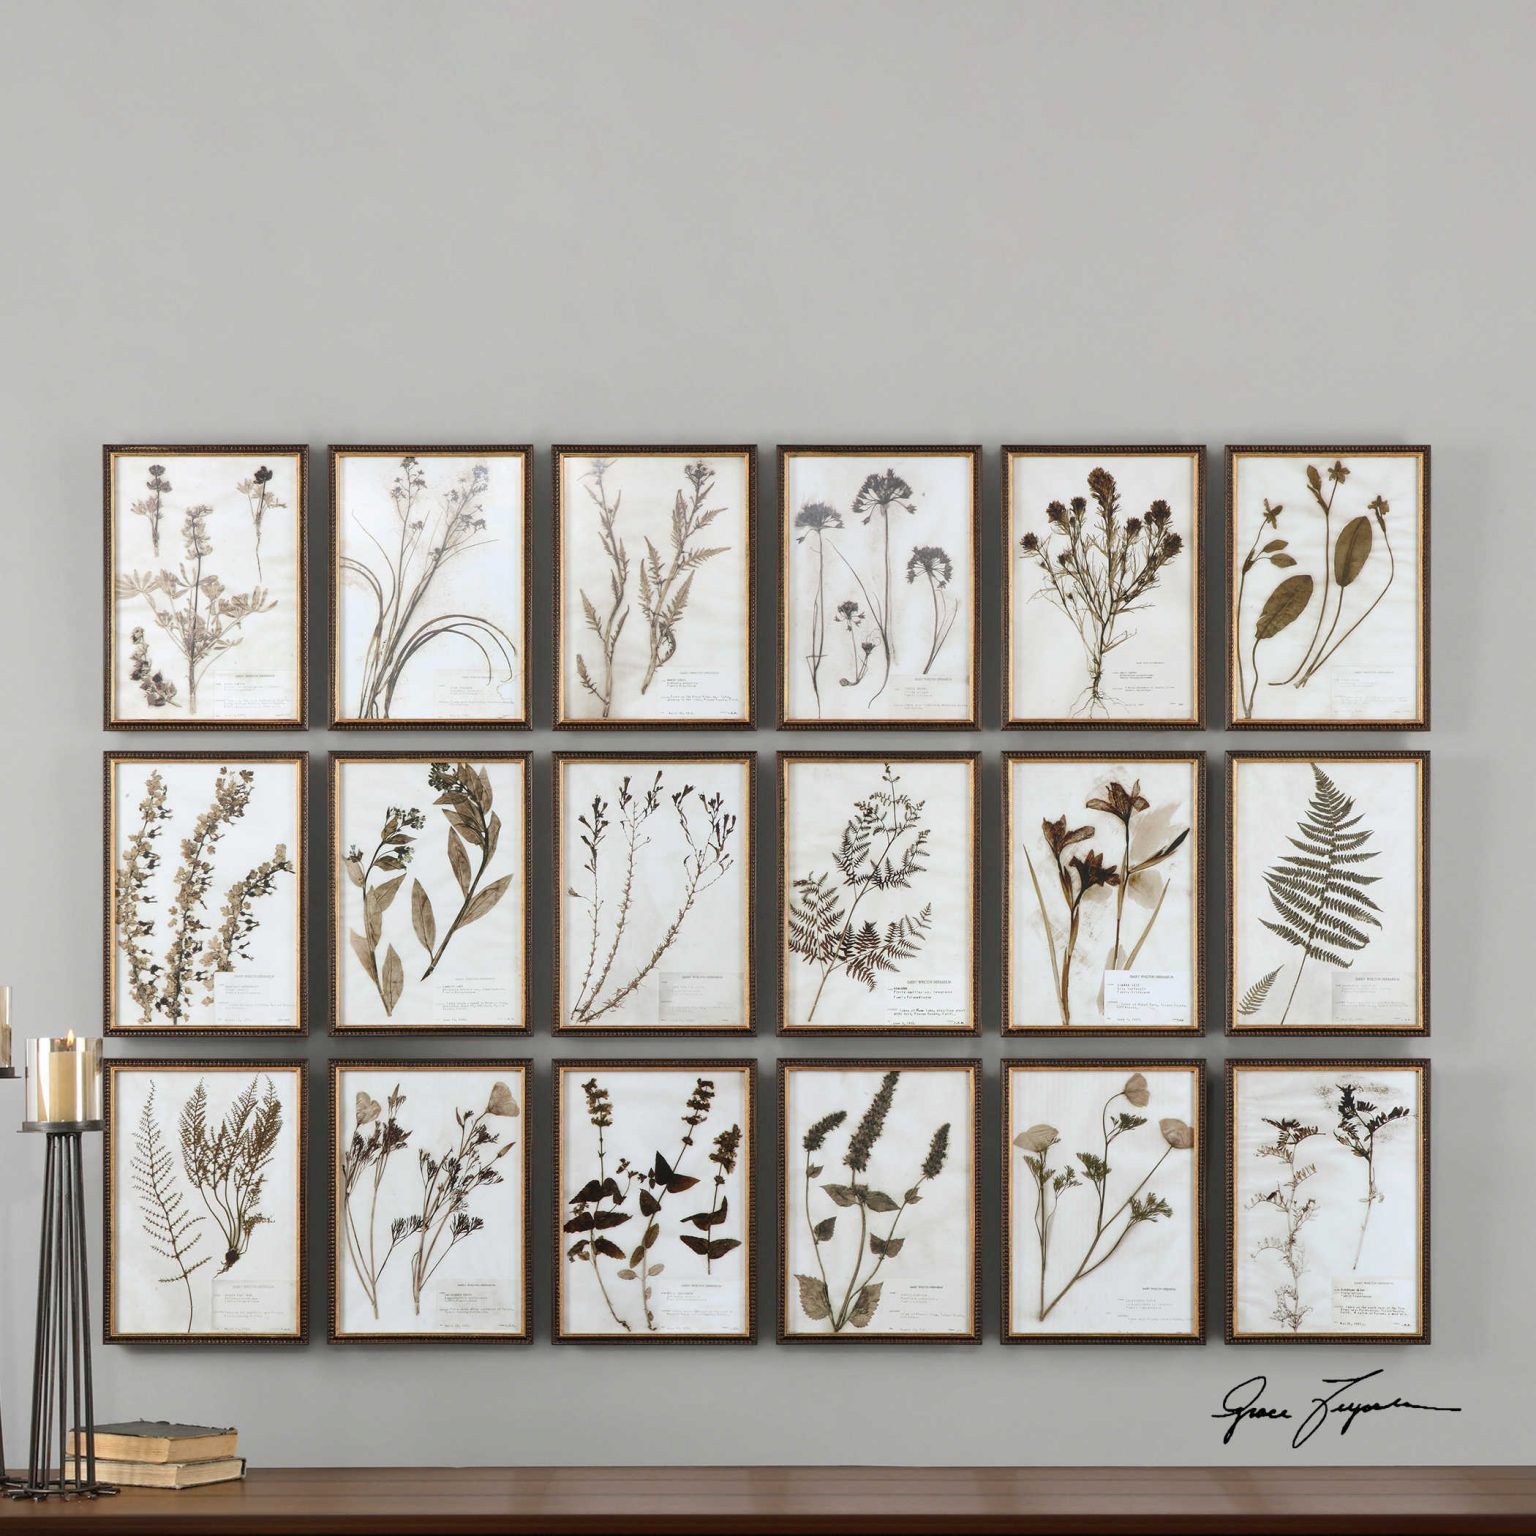 Framed dried botanical prints provide beautiful home decor